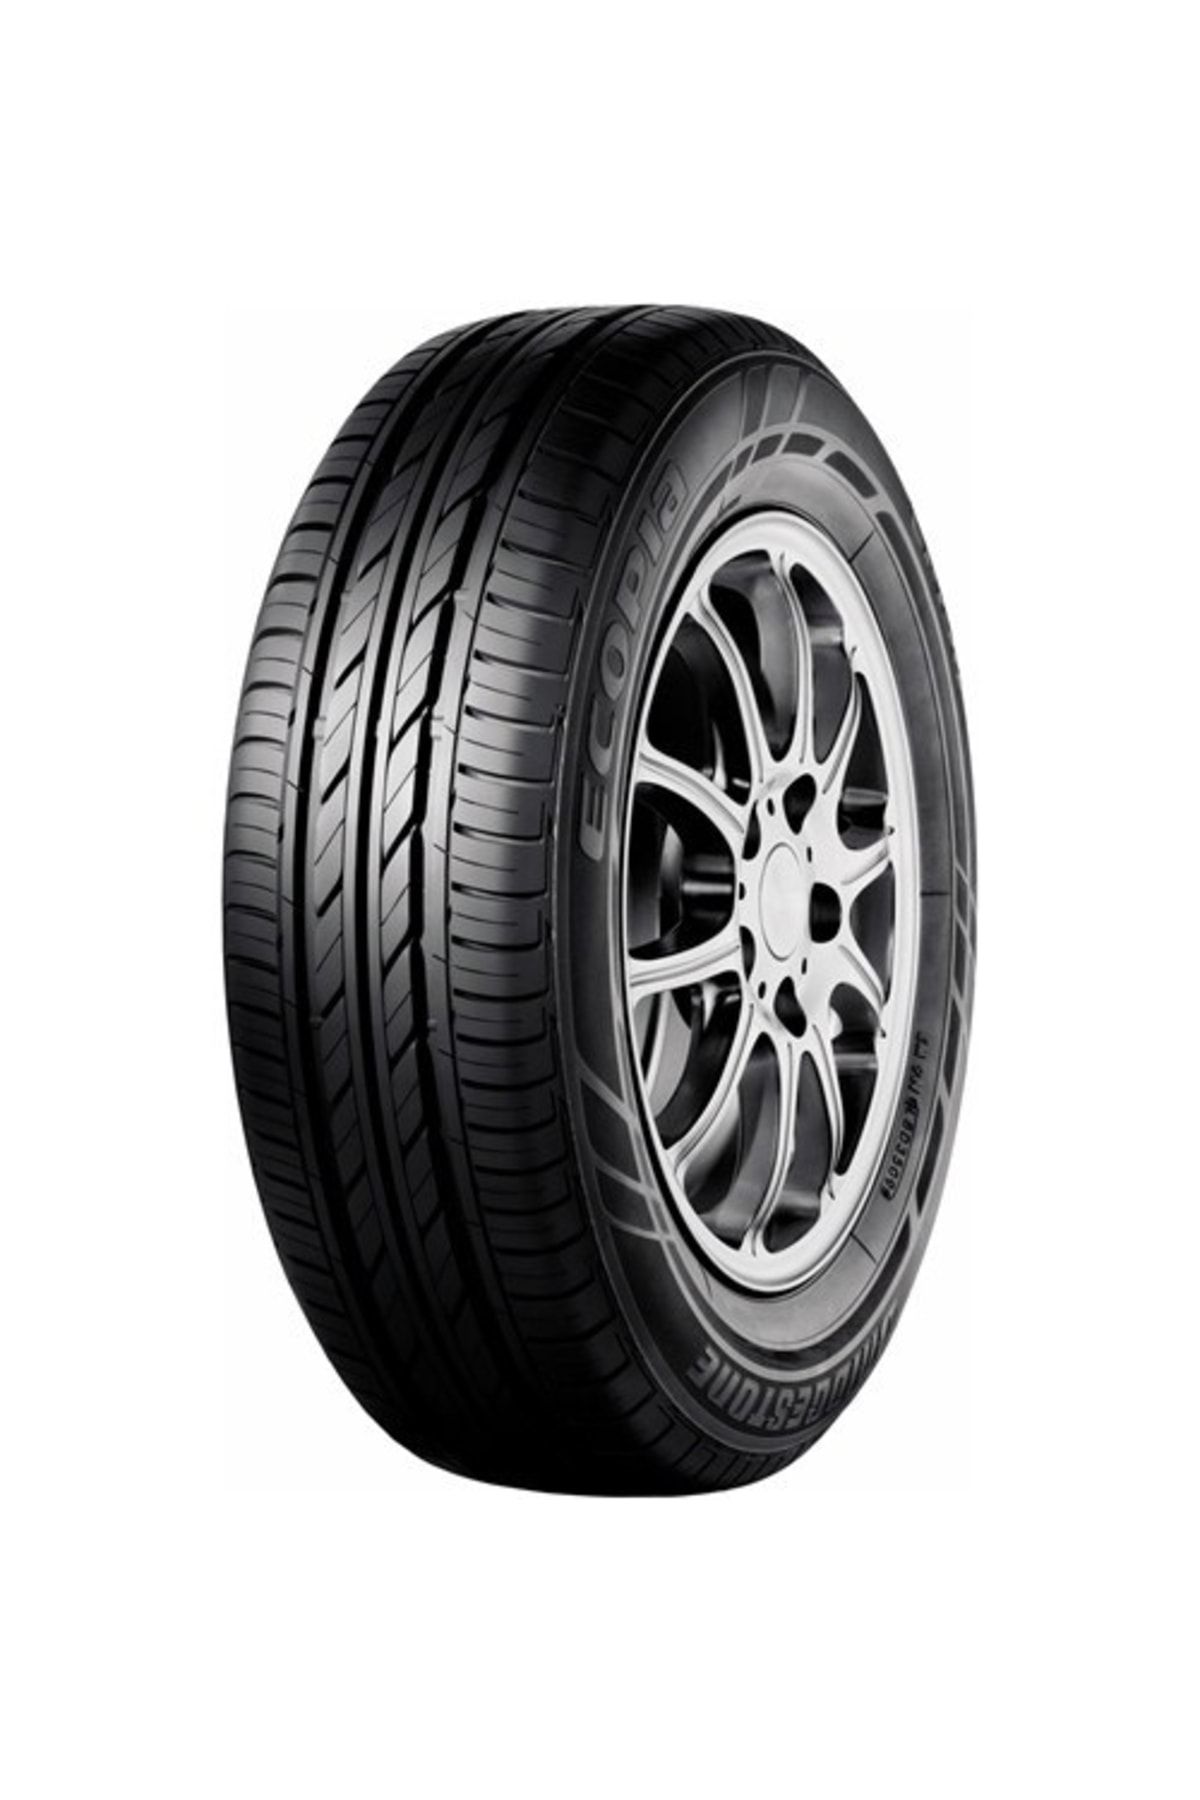 Bridgestone 195/65r15 91h Ecopia Ep150 (yaz) (2021)